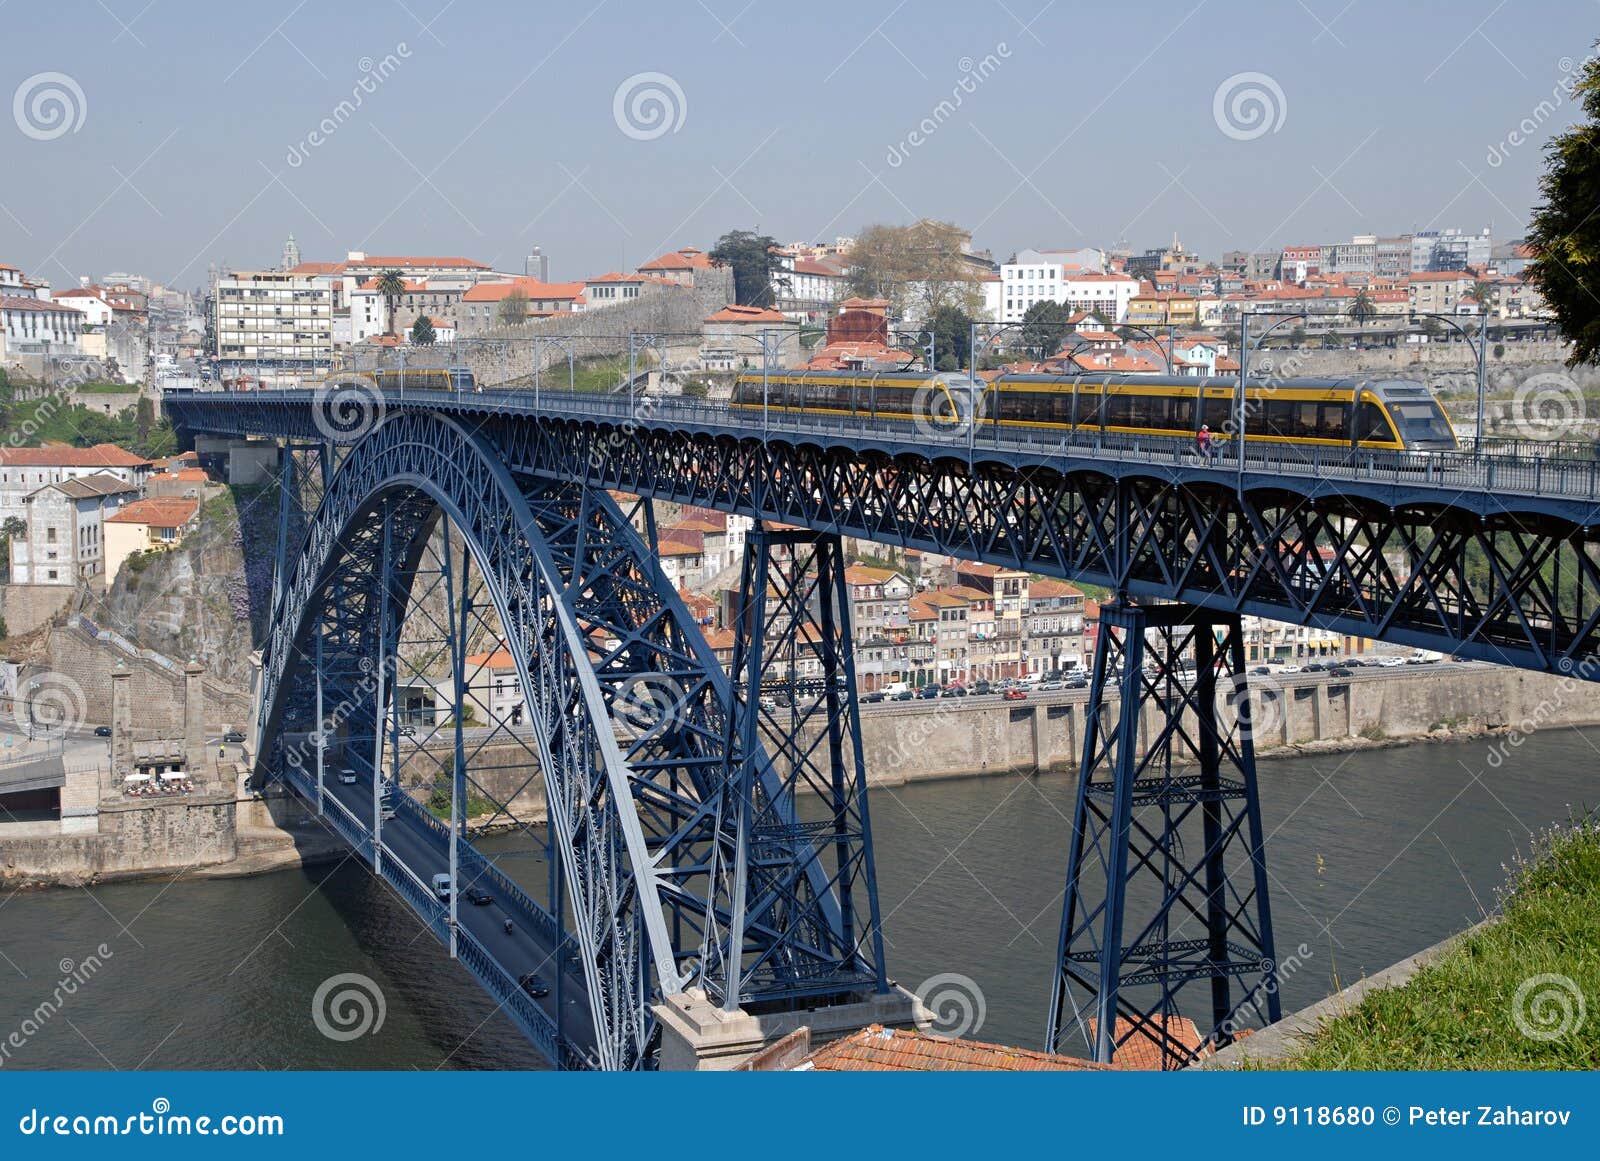 Tram on the bridge. Porto. Tram on the bridge of Luis I over Douro river, Porto. Bridge was made by design oà ‡ustaf Eiffel. Point of interest in Portugal.